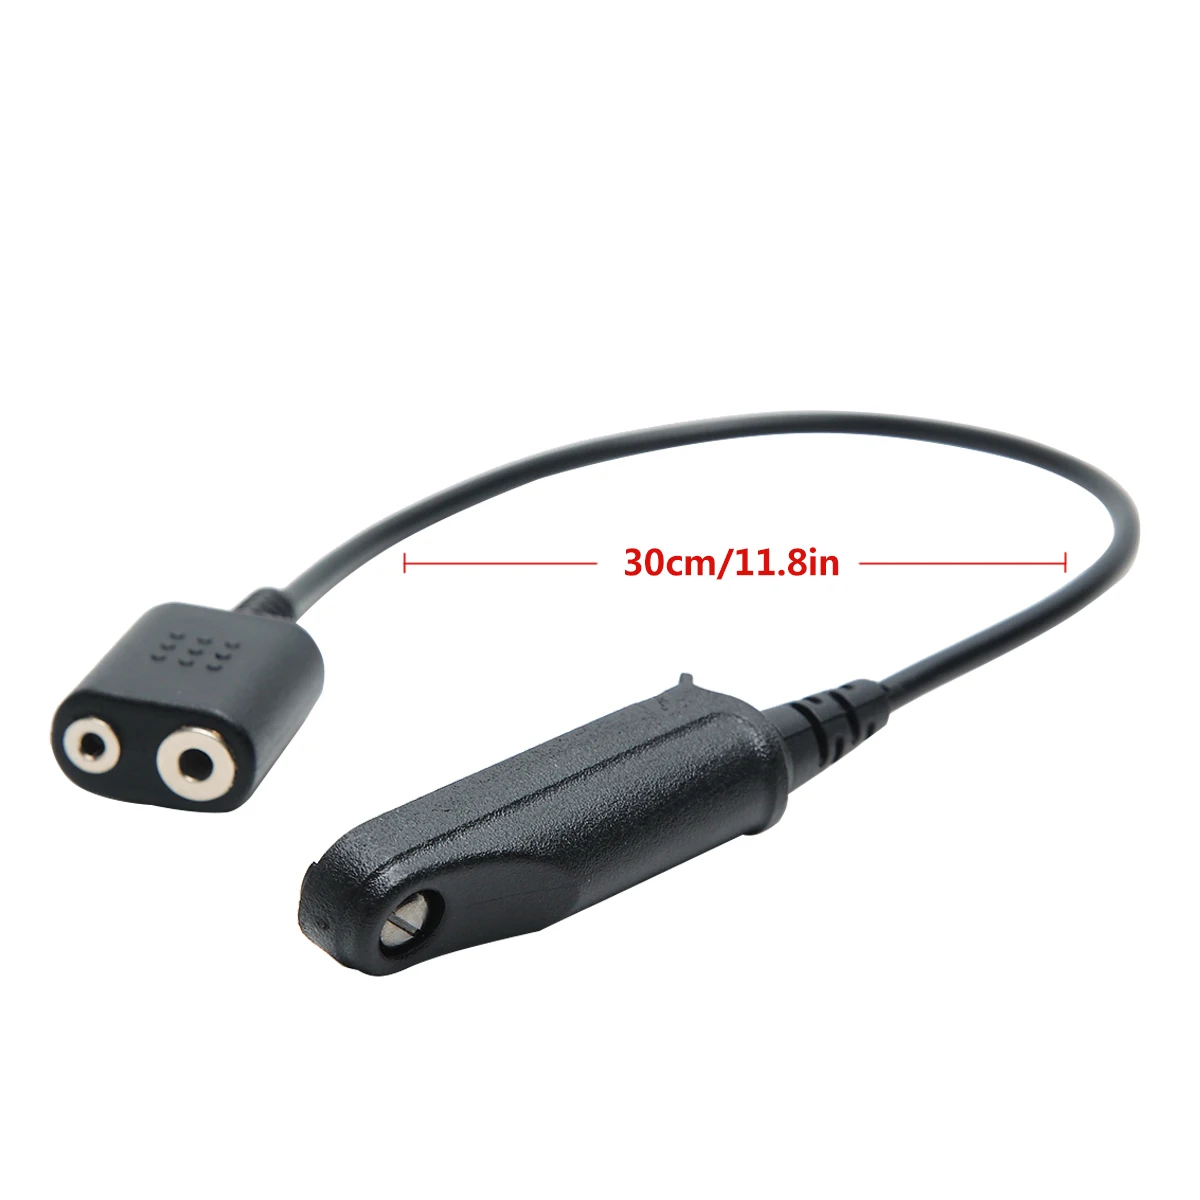 Иди и болтай Walkie Talkie “иди и аудио кабель-адаптер для Baofeng BF-9700 A-58 UV-XR UV-5S GT-3WP UV-9R плюс для K Интерфейс 2 Pin UV-5R гарнитура Por